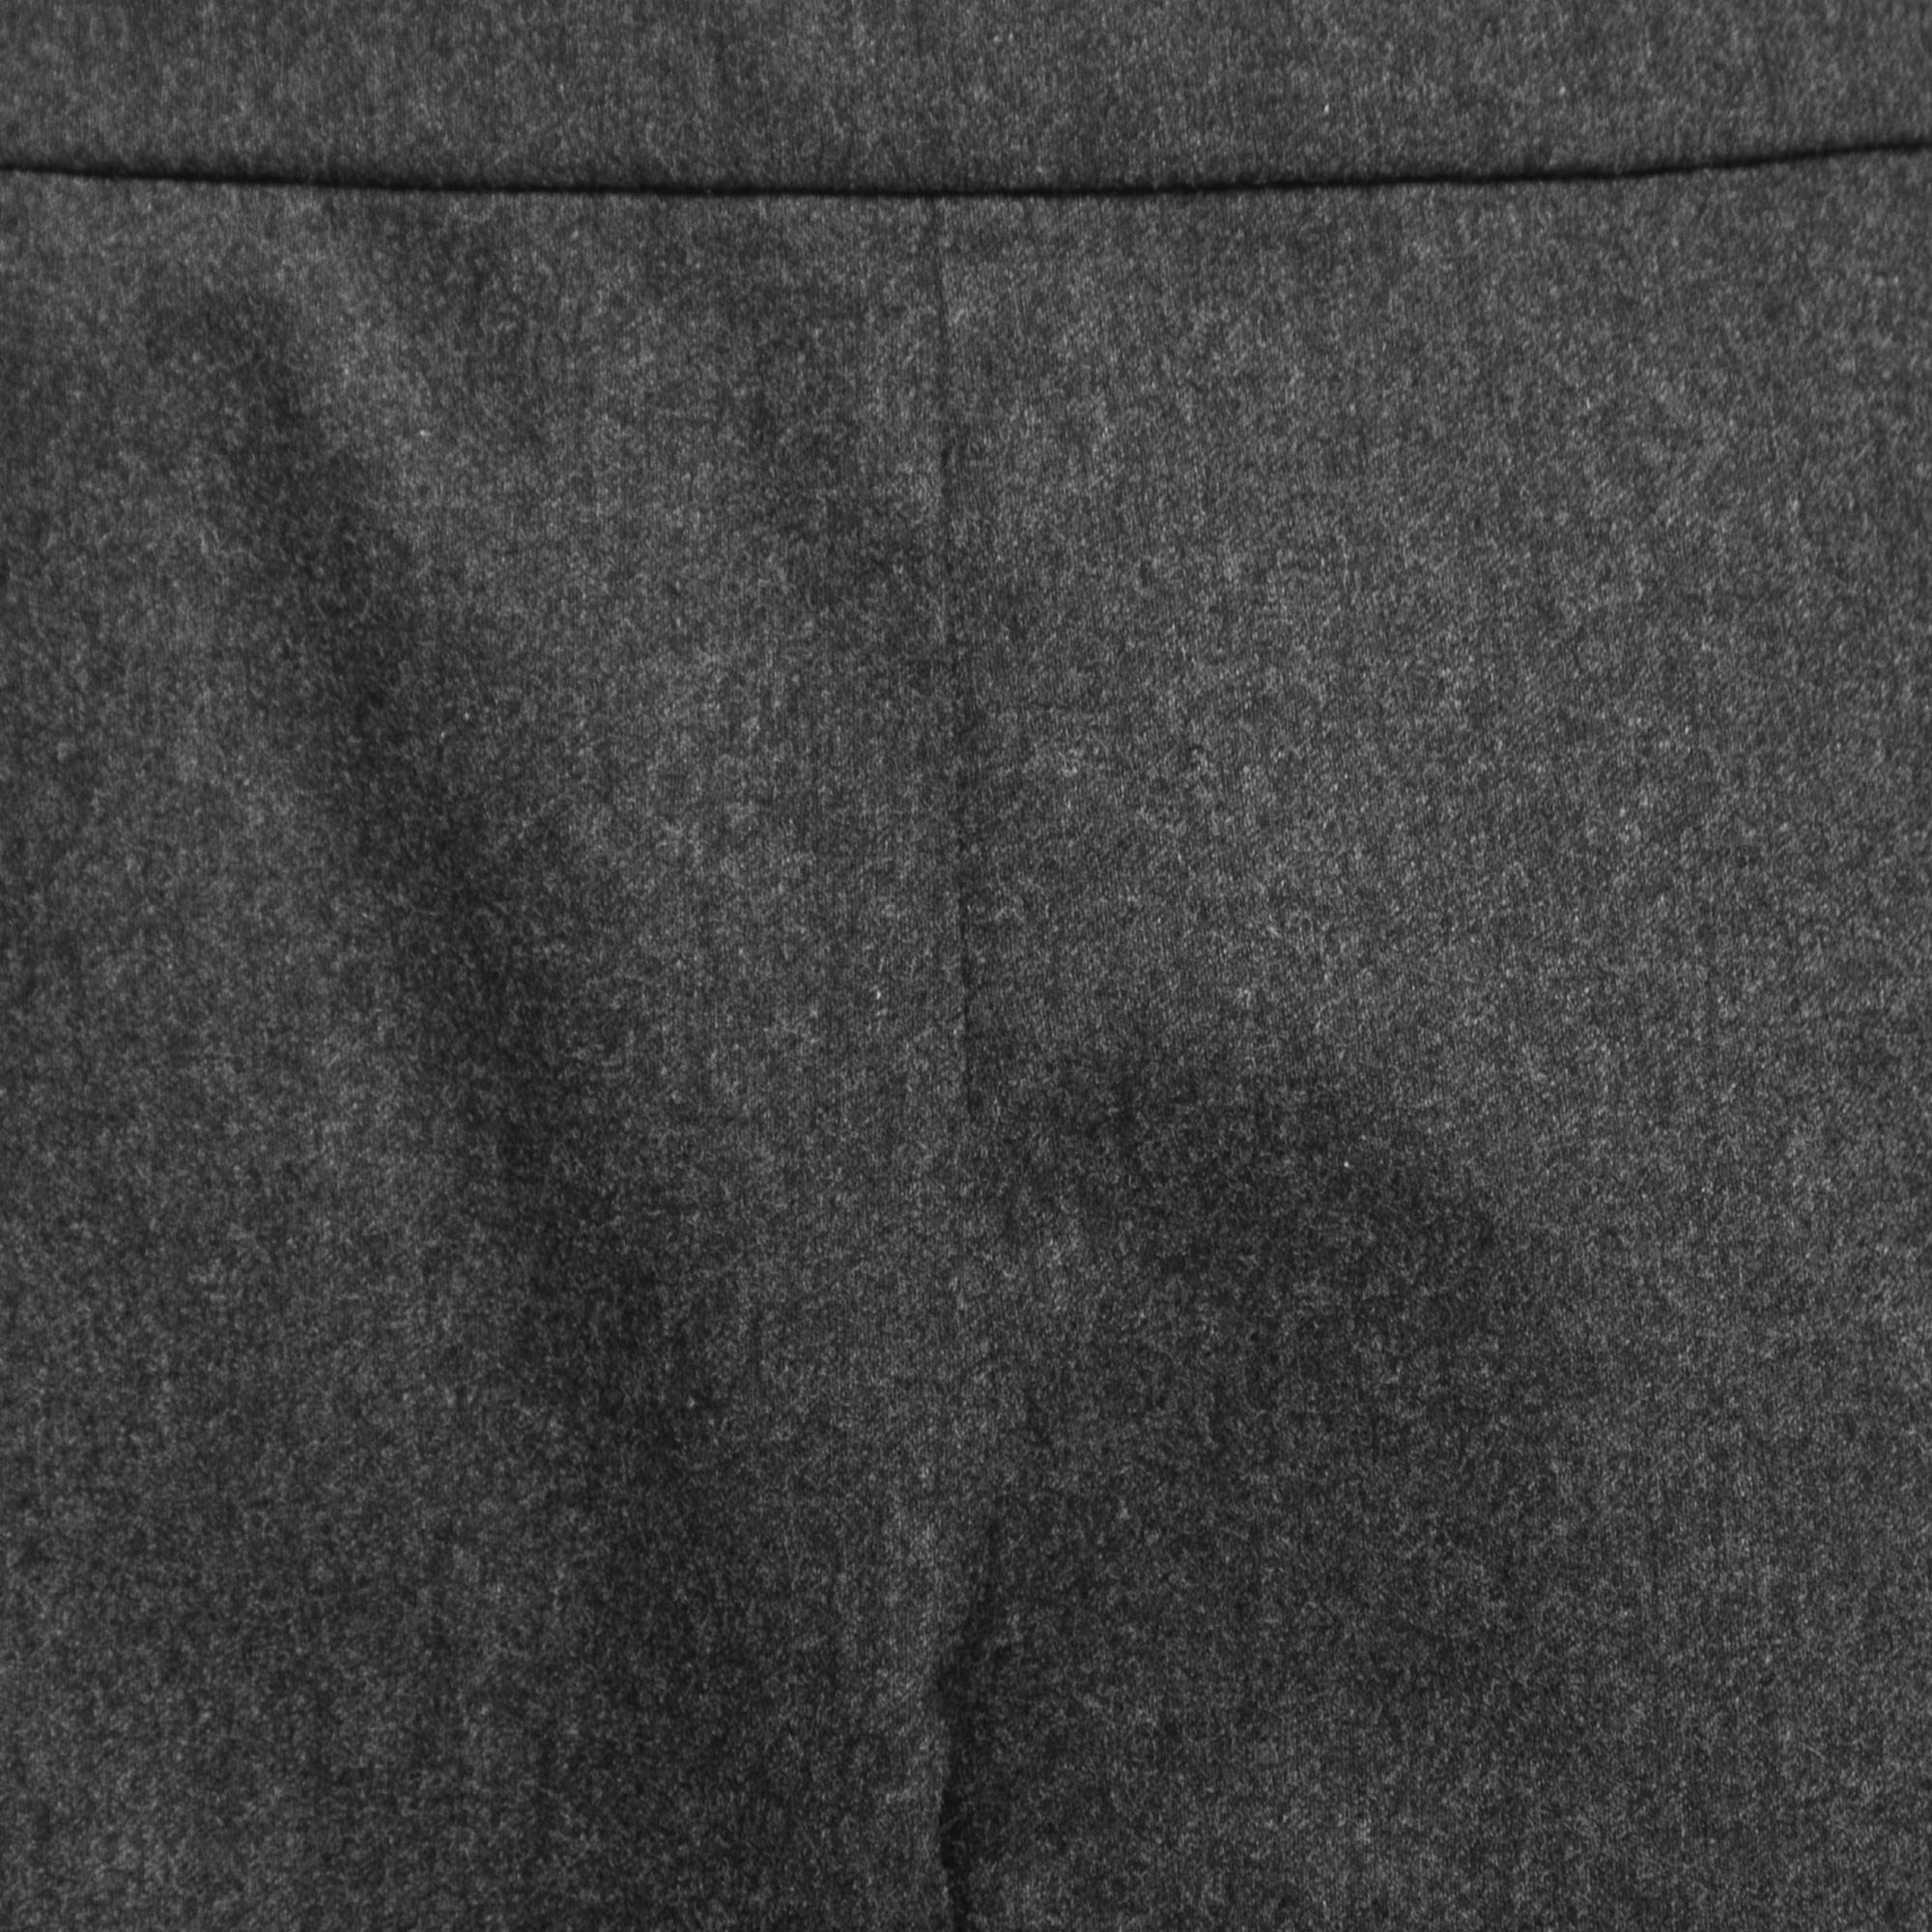 Emporio Armani Charcoal Grey Wool Elastic Waist Trousers M